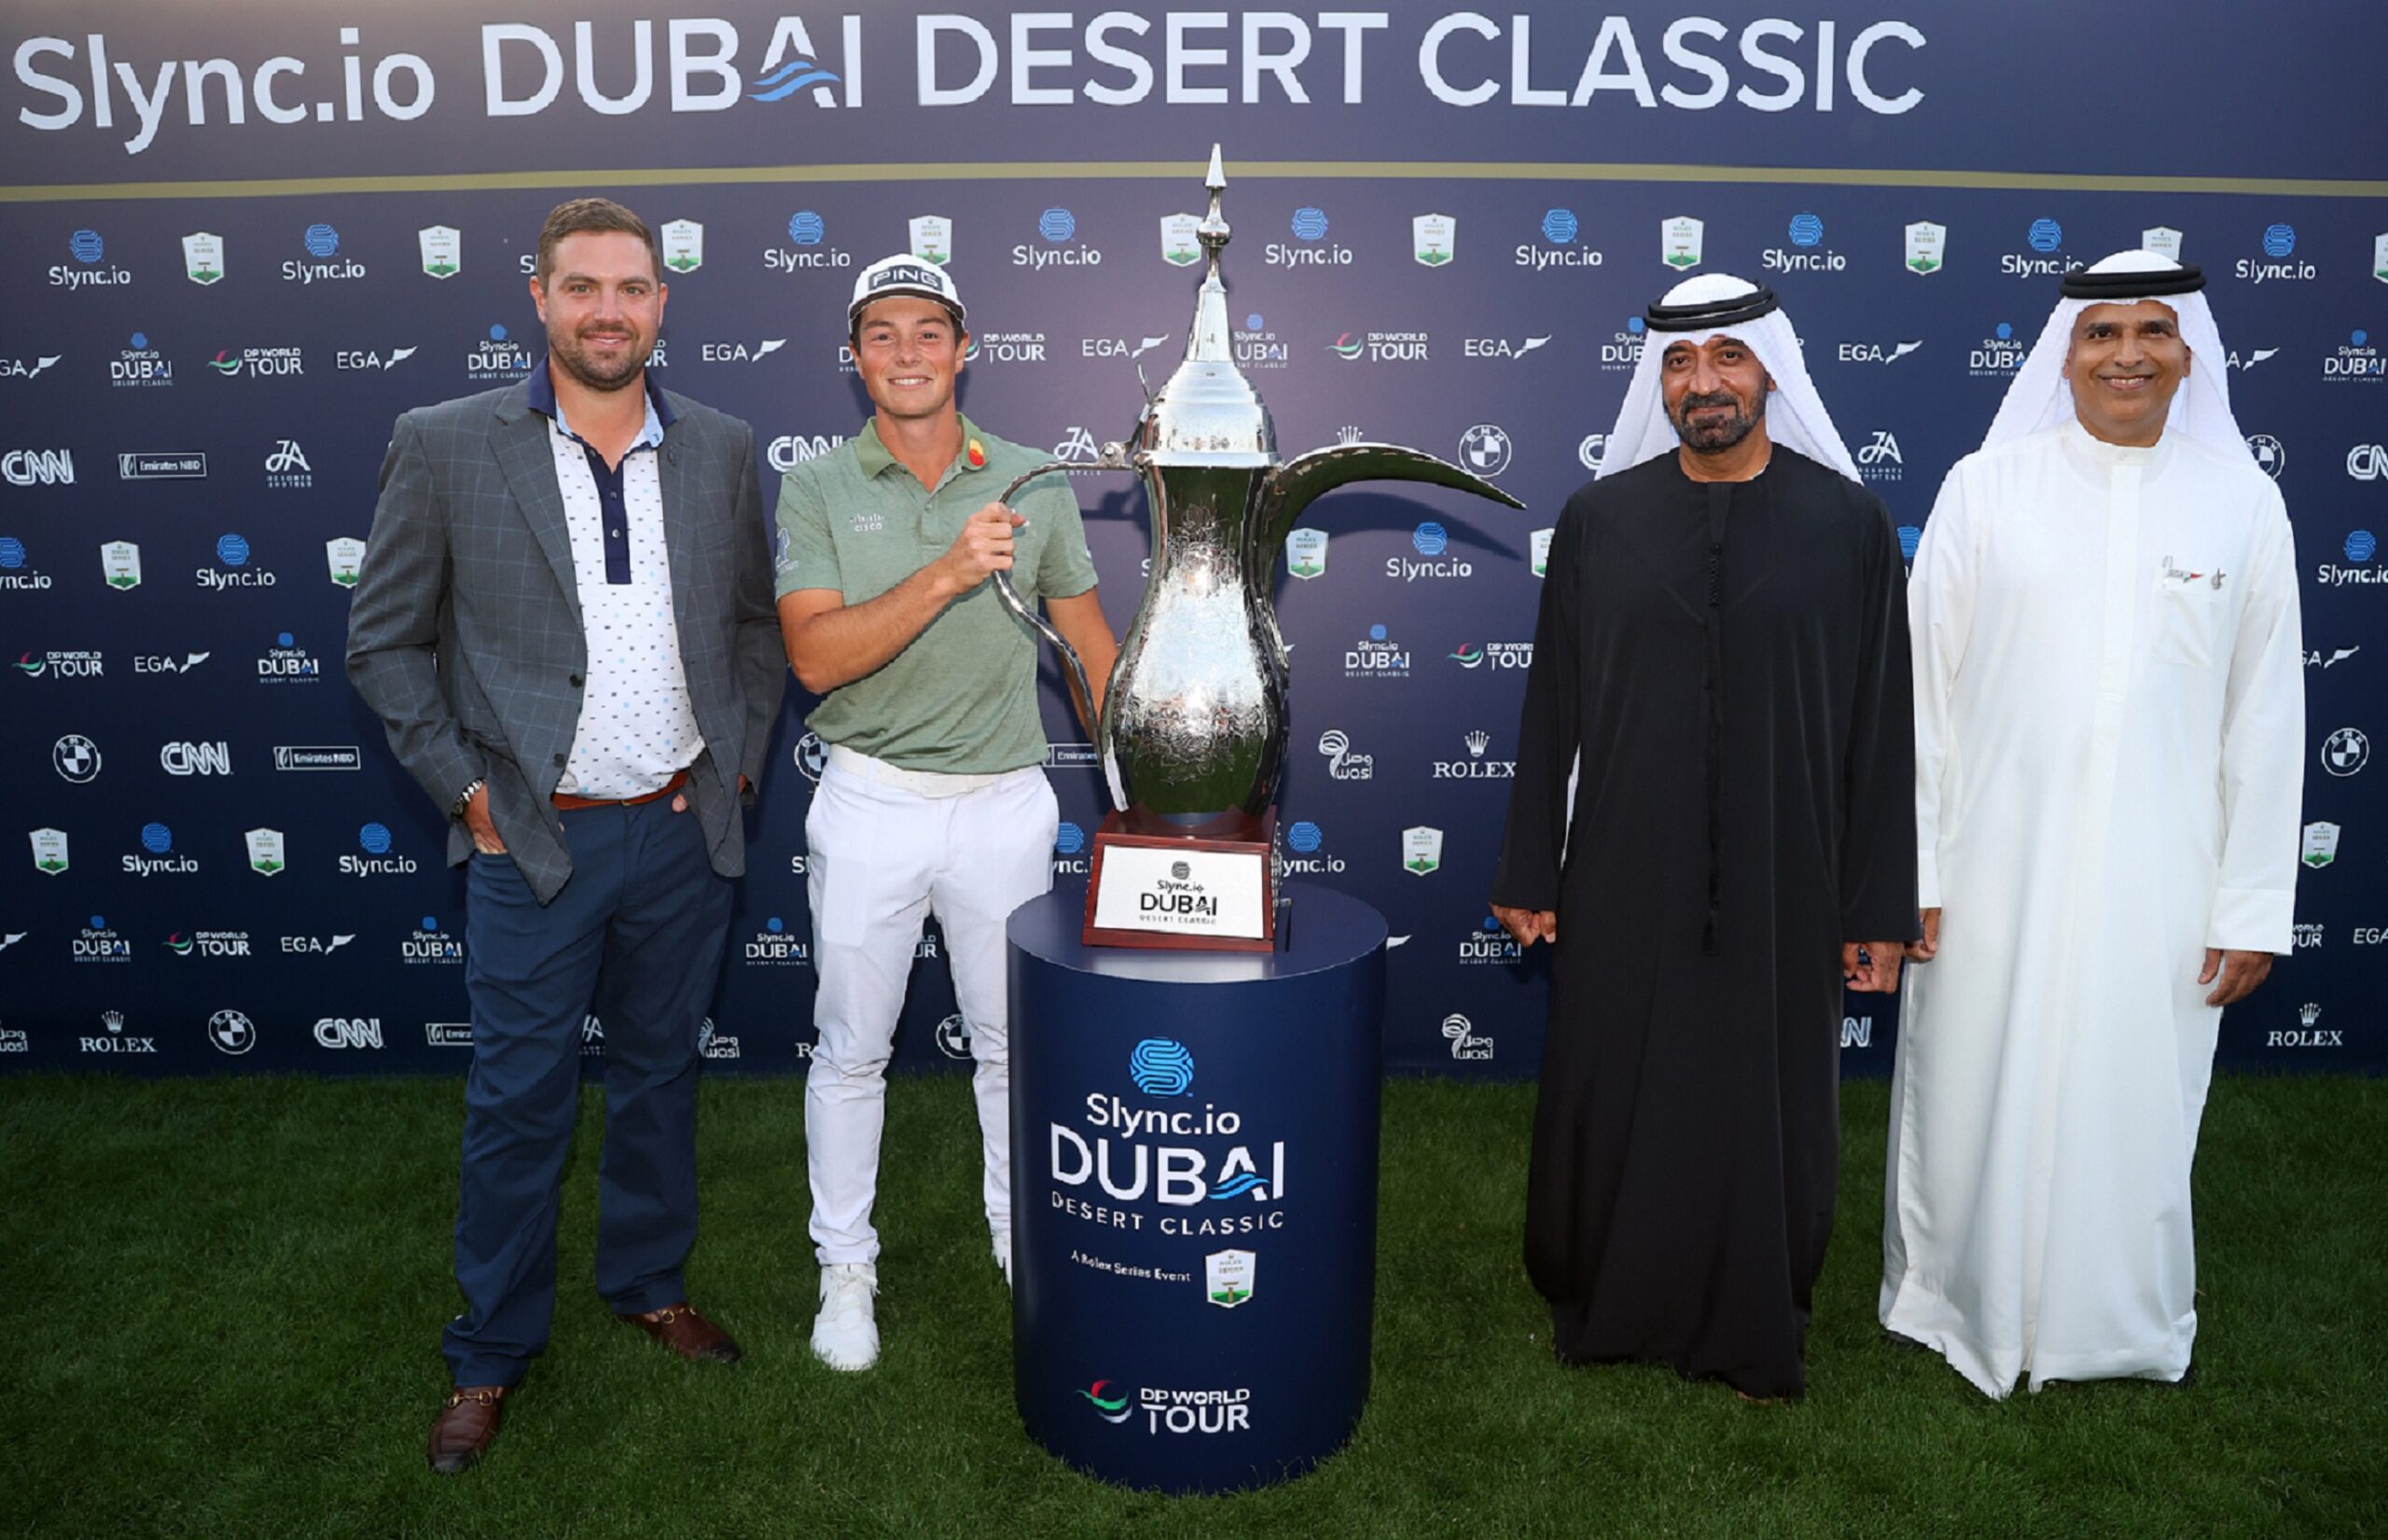 Viktor-ious! Hovland bags maiden Slync.io Dubai Desert Classic with thrilling play-off win over Bland